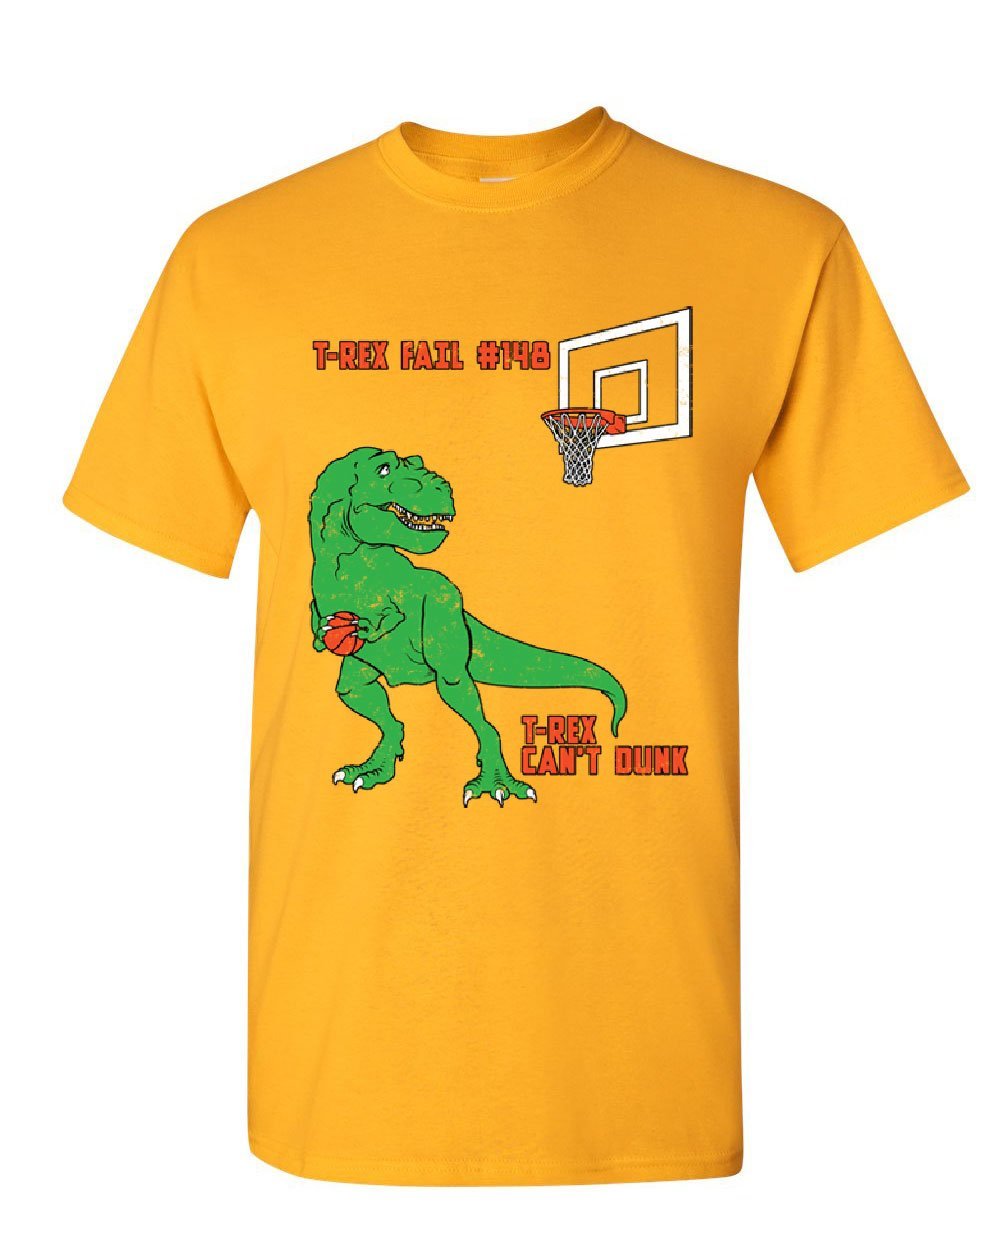 Tee Hunt T-Rex Cant Dunk Funny Muscle Shirt Basketball Tyrannosaurus Fail 